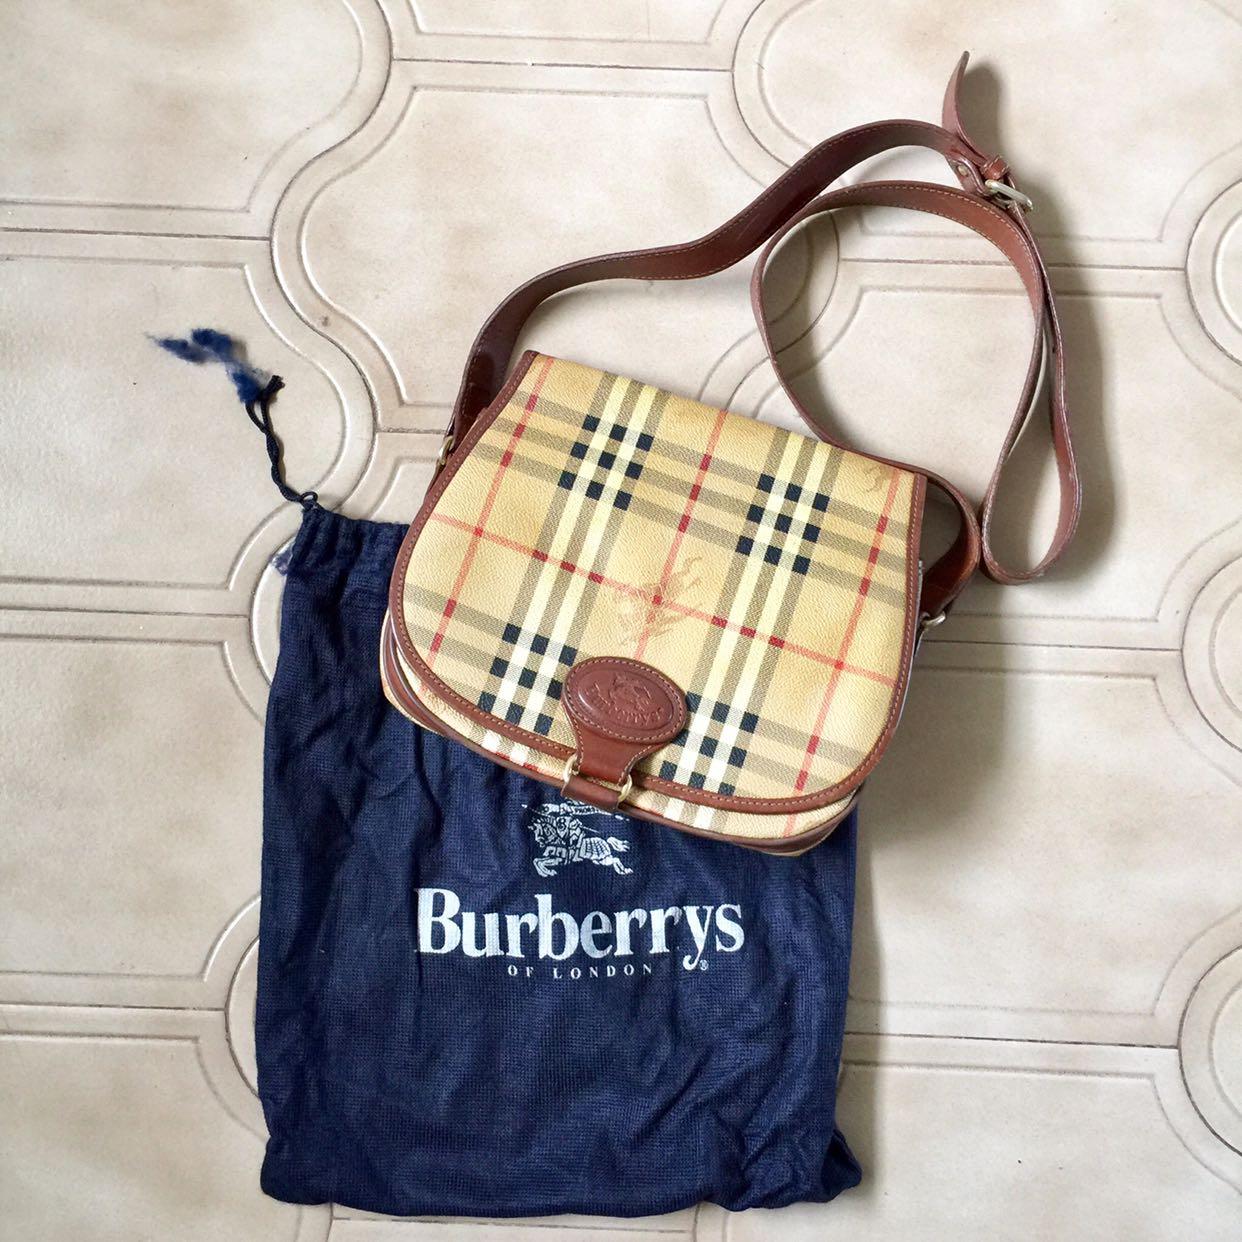 burberry london purse